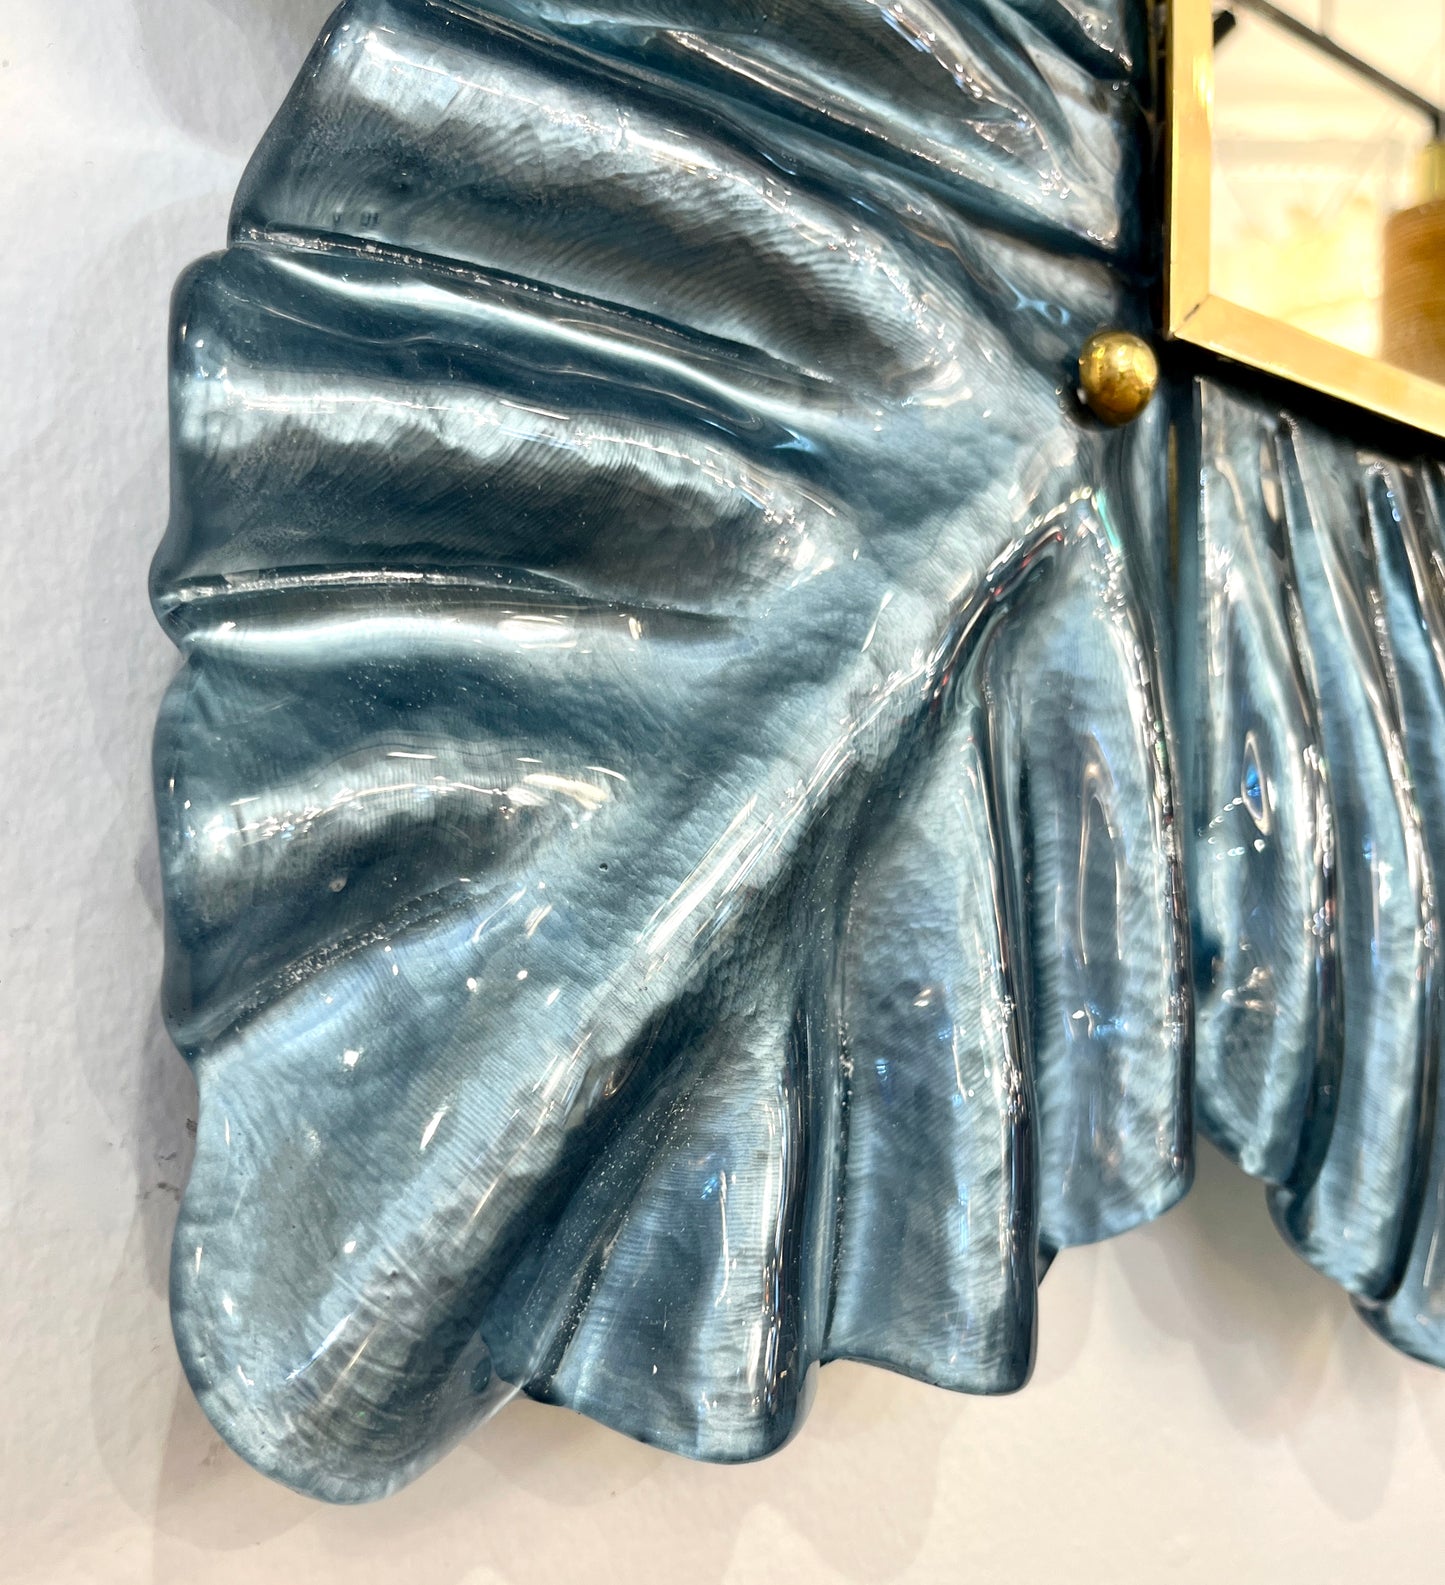 Bespoke Italian Modern Leaf Design Avio Silver Blue Murano Glass Brass Mirror